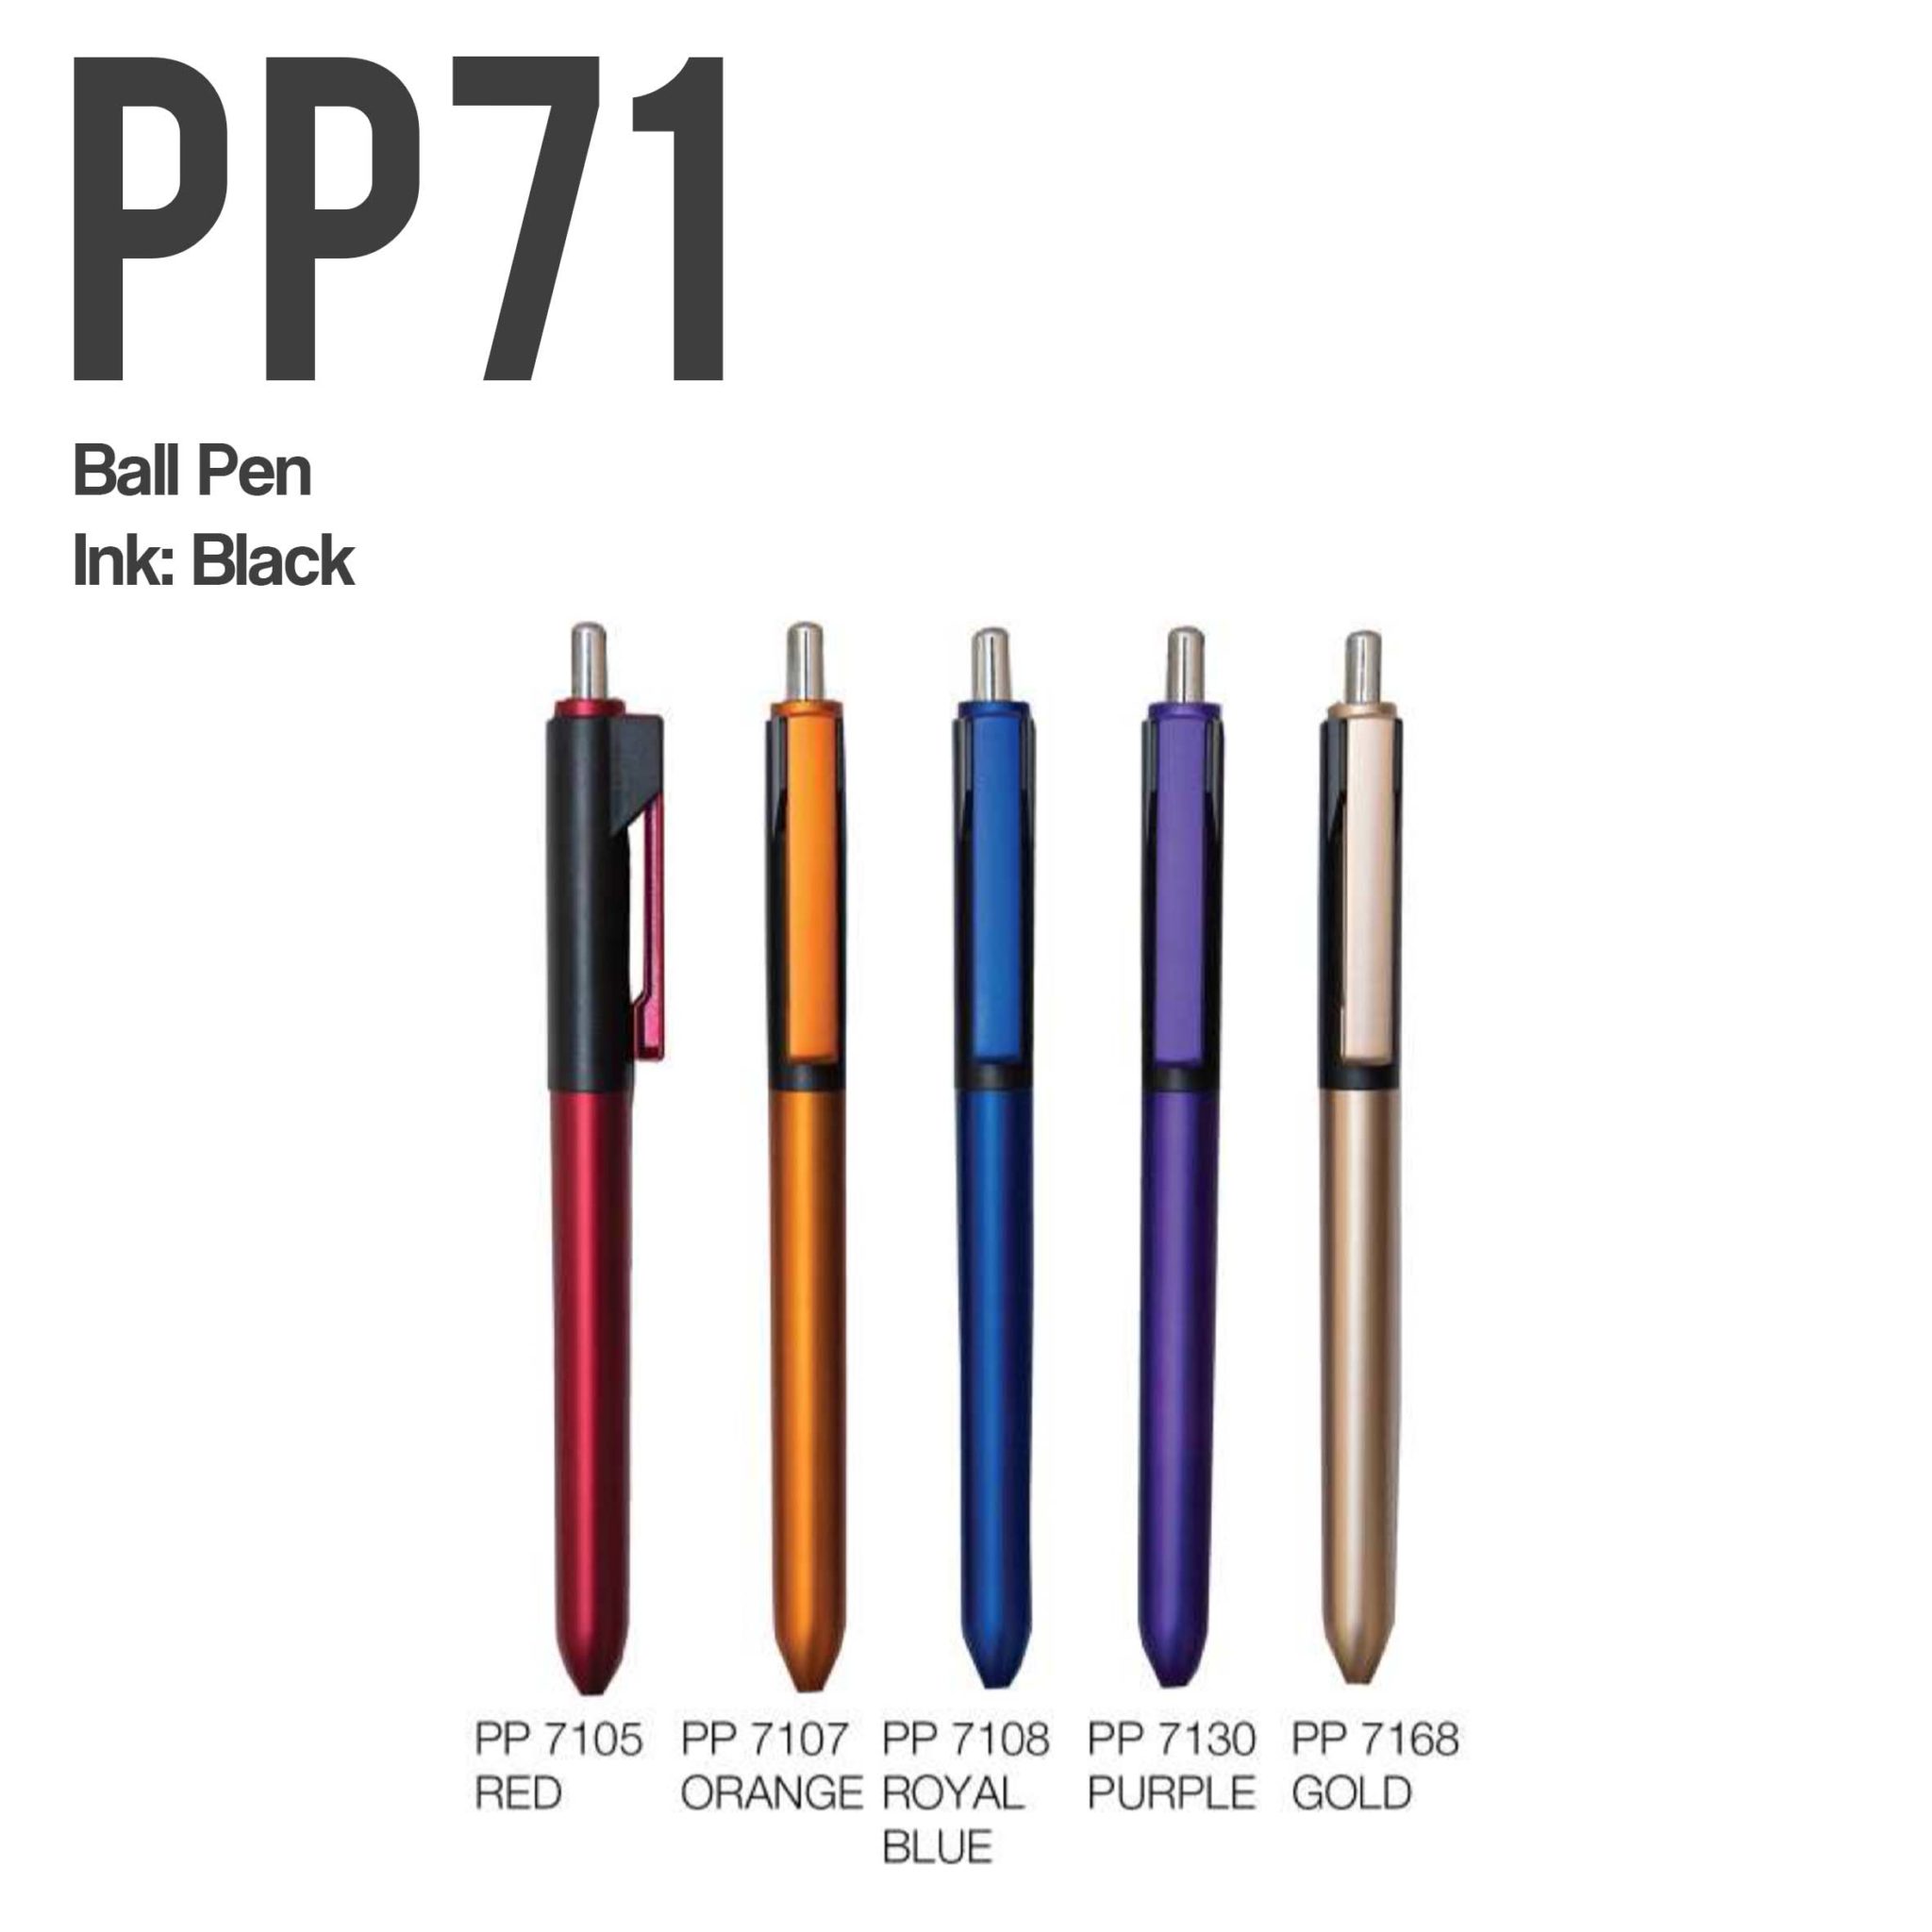 PP71 plastic pen scaled